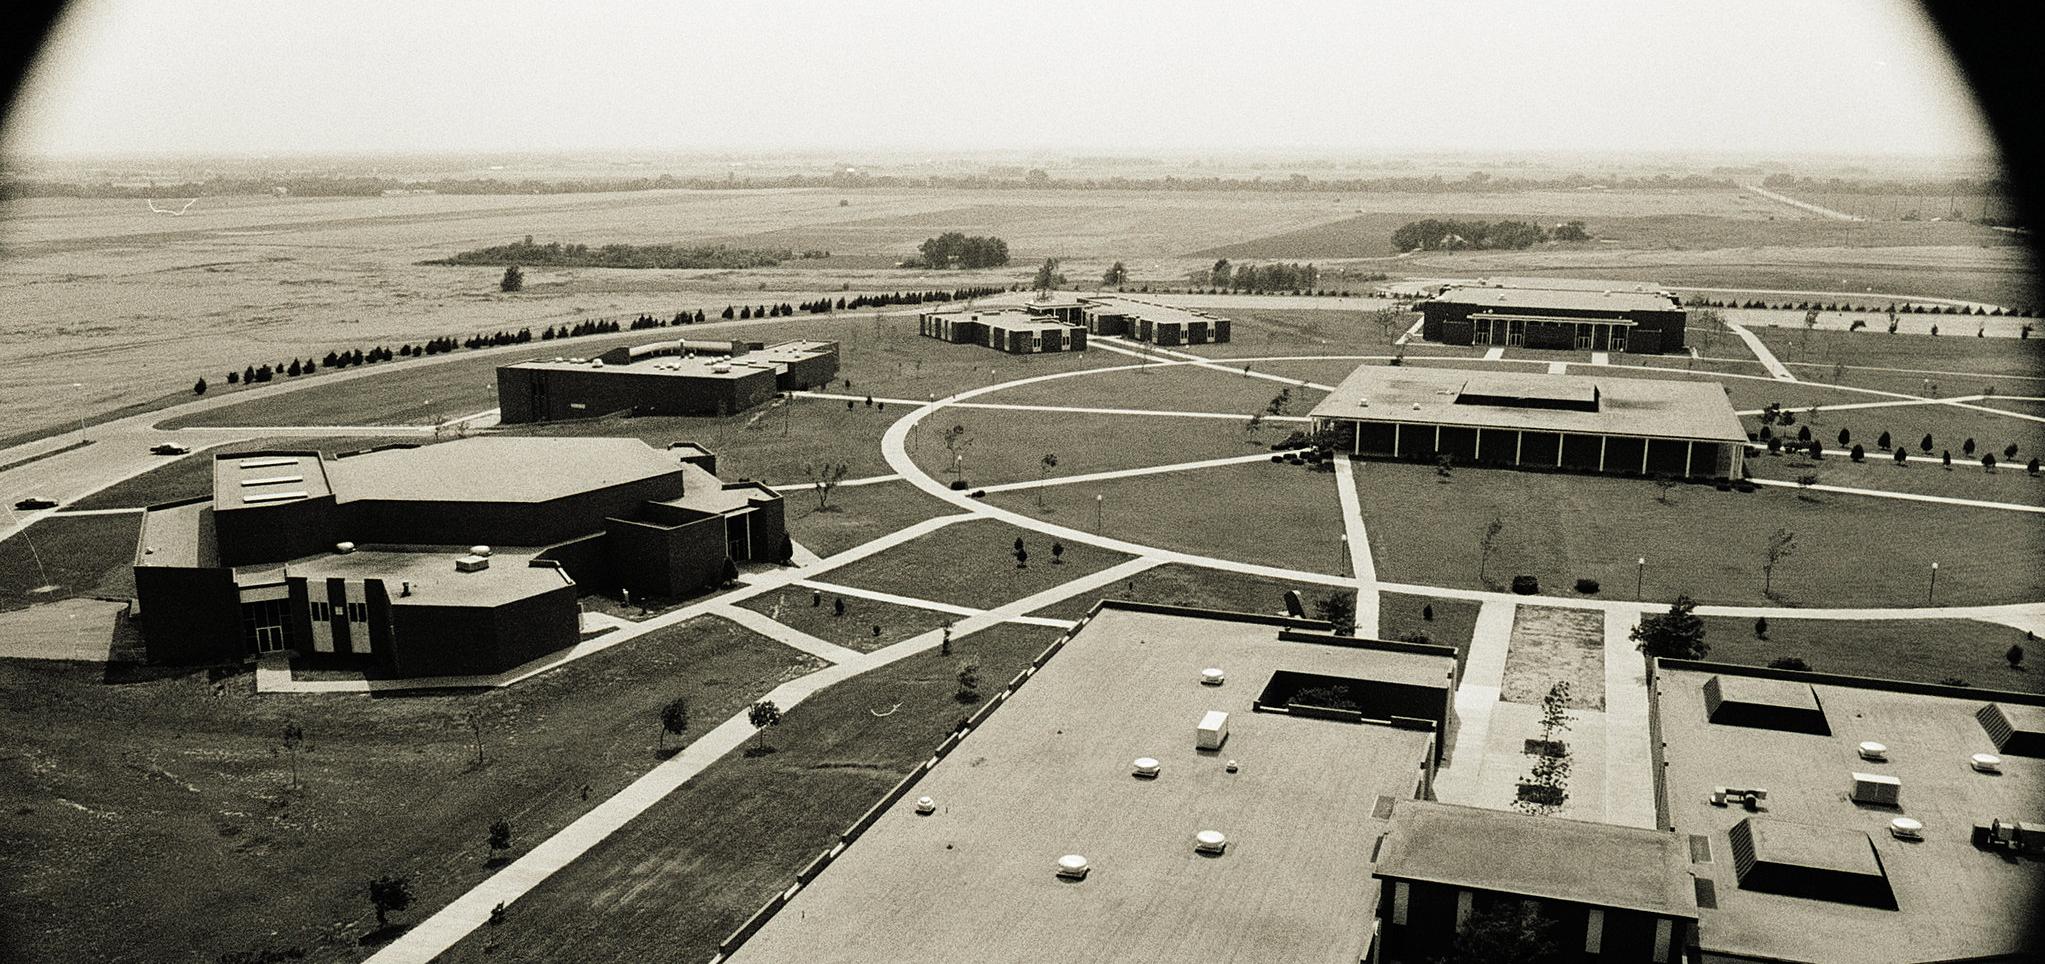 Vintage aerial photo of campus